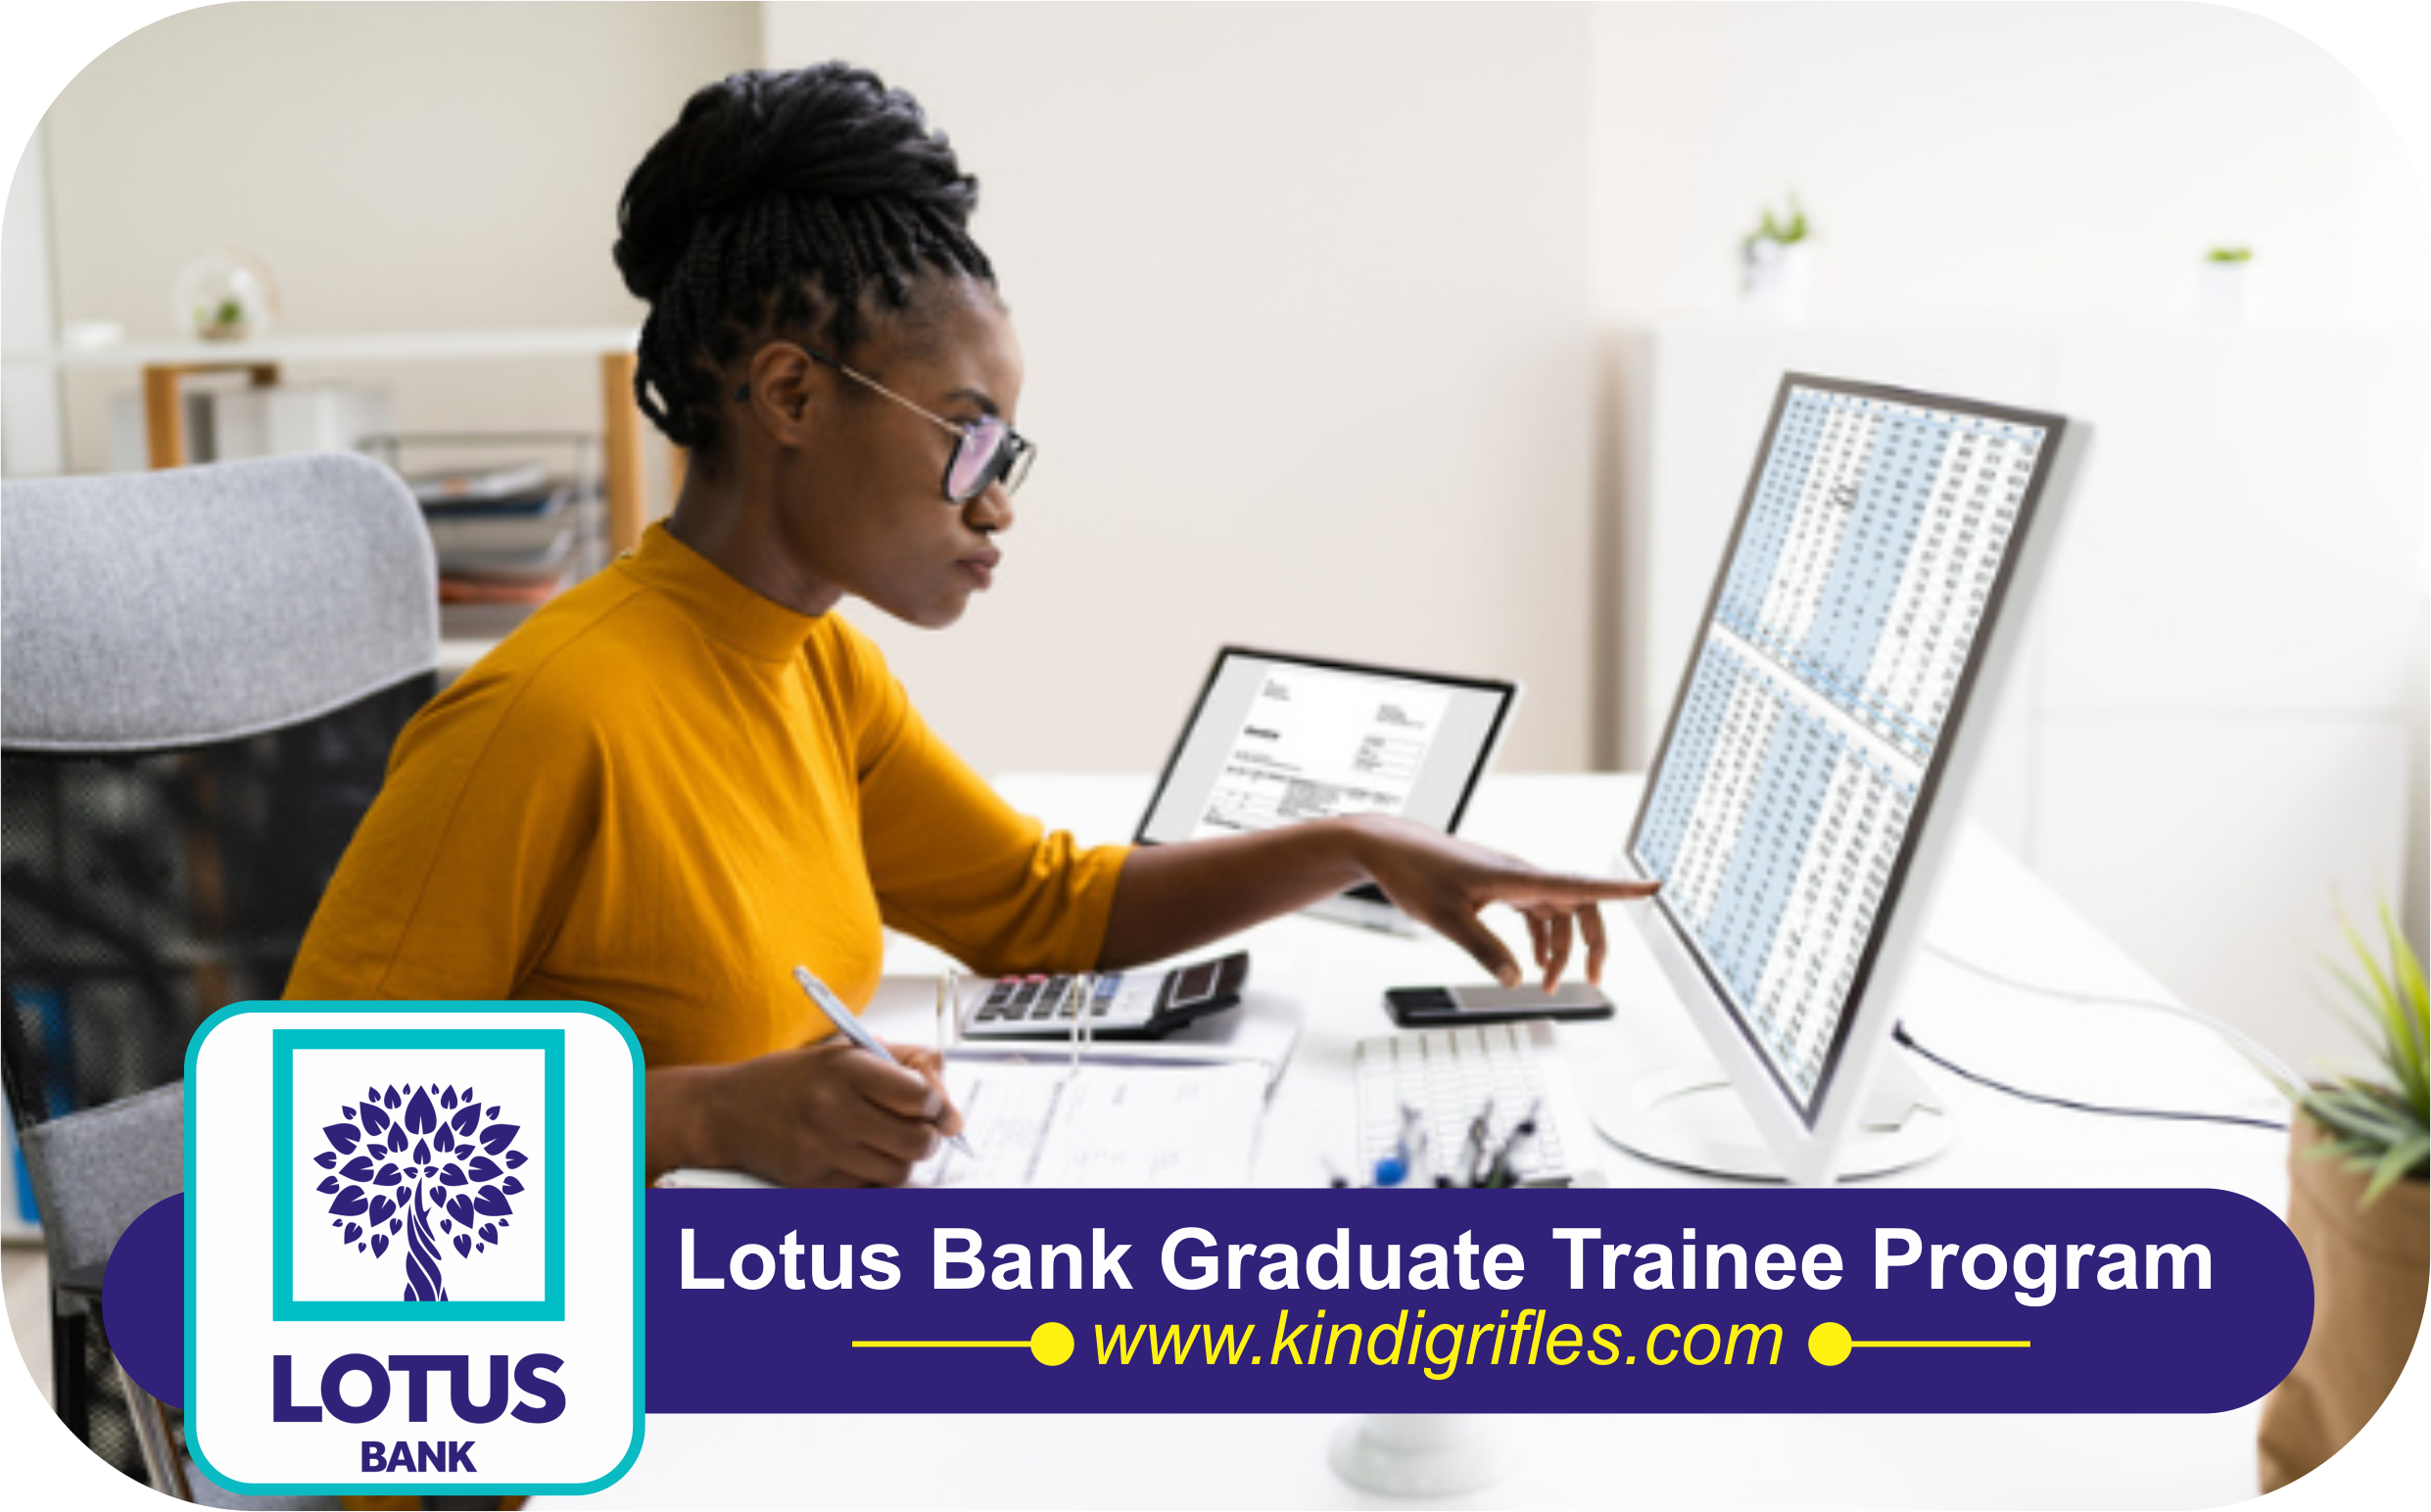 Lotus Bank Graduate Trainee Program